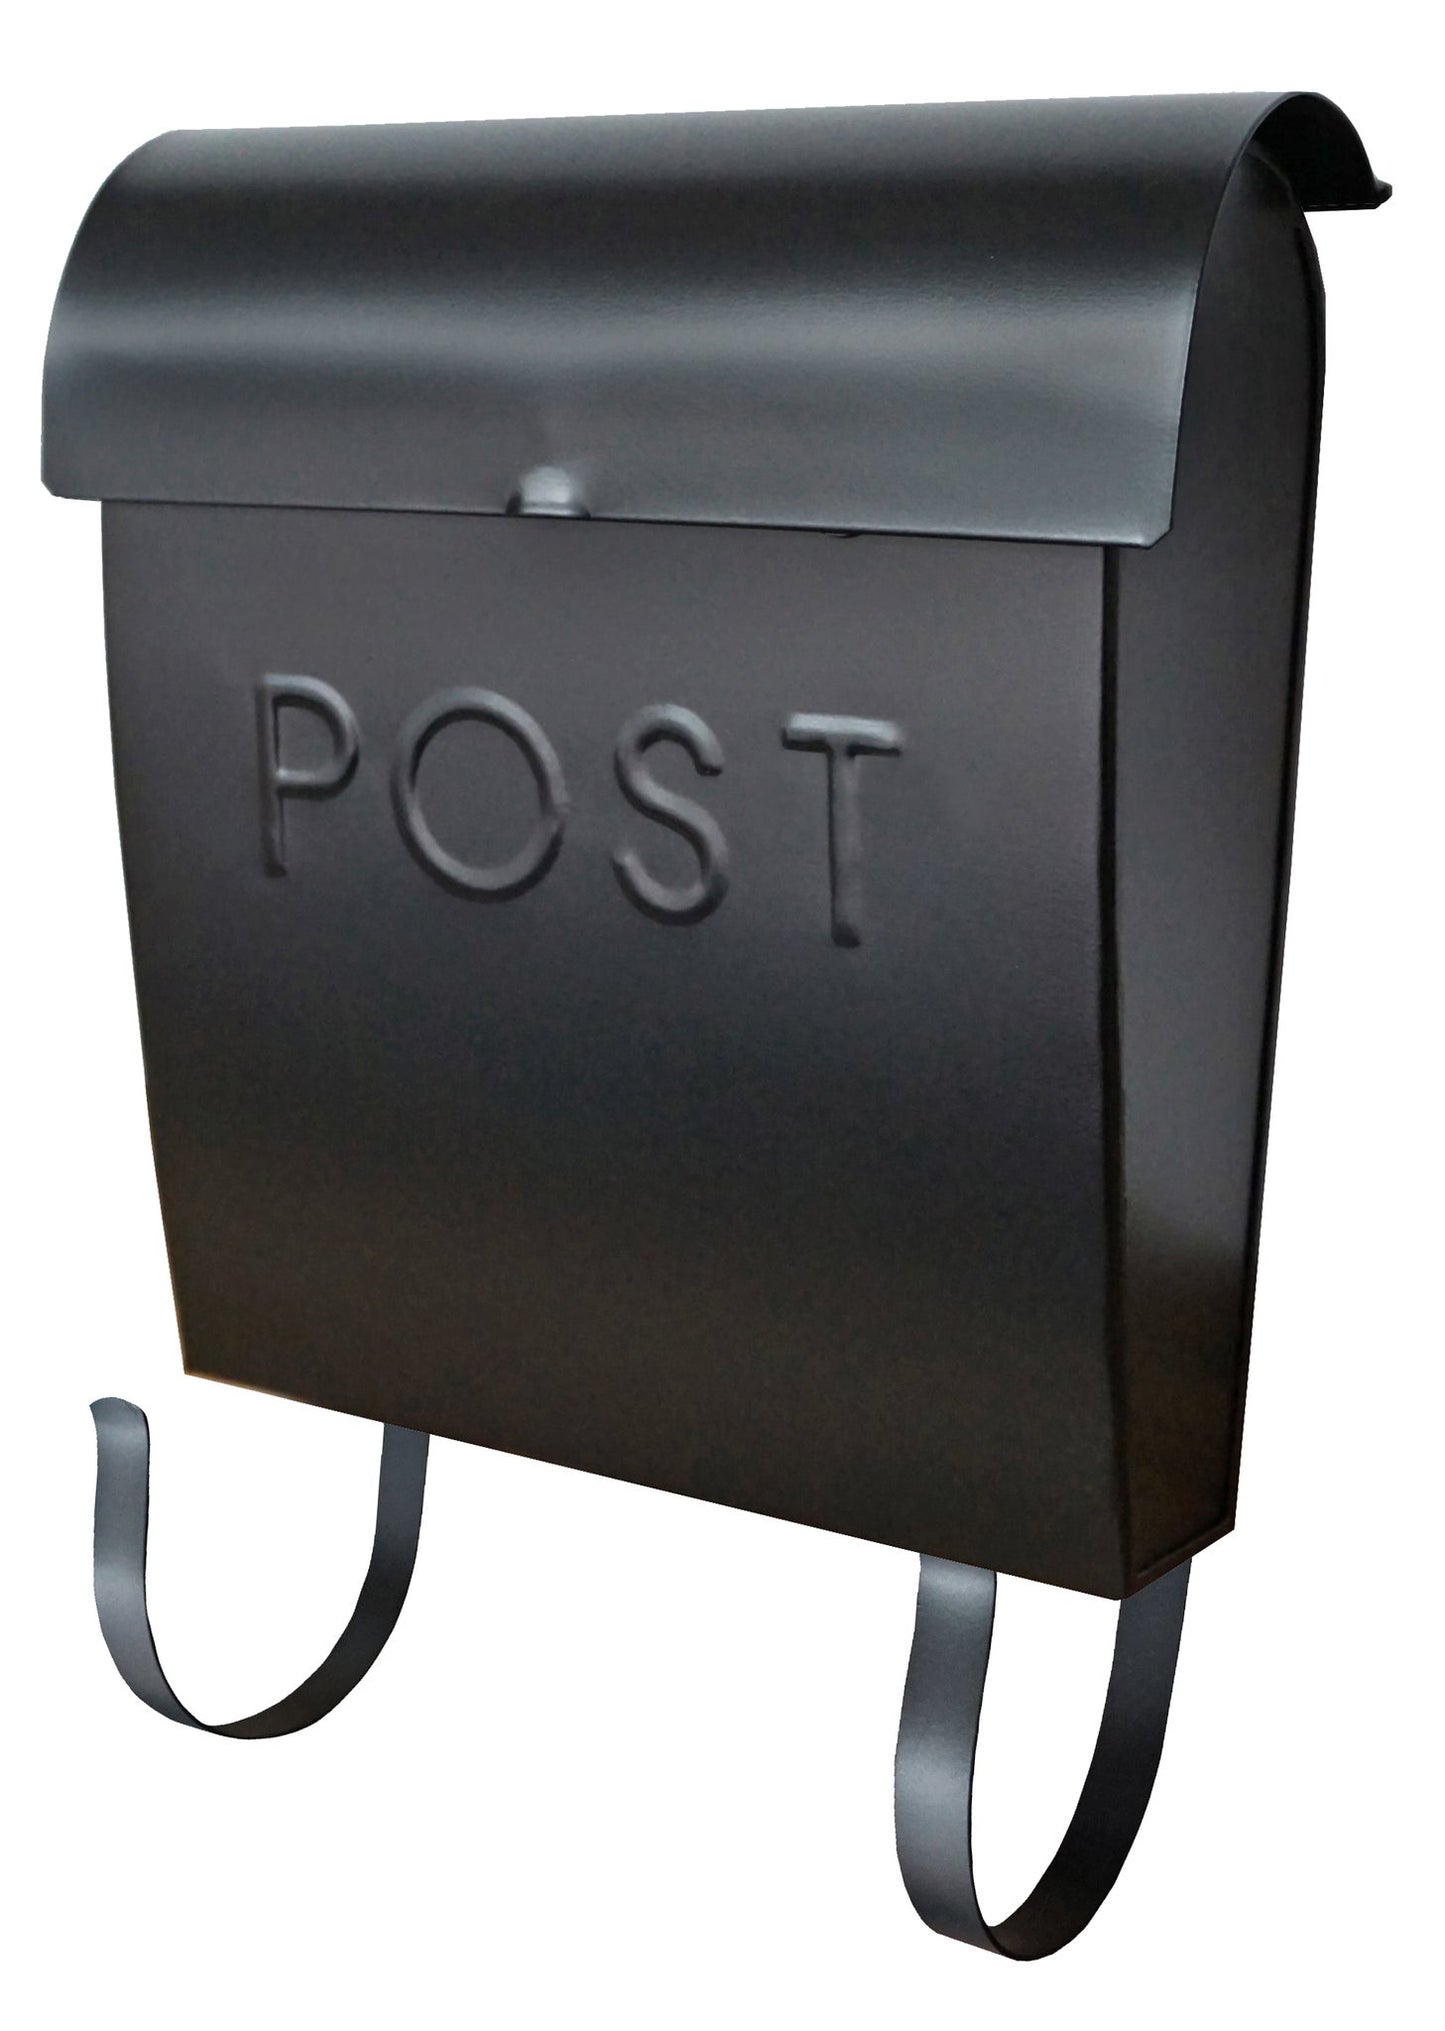 Black Euro Mailbox POST